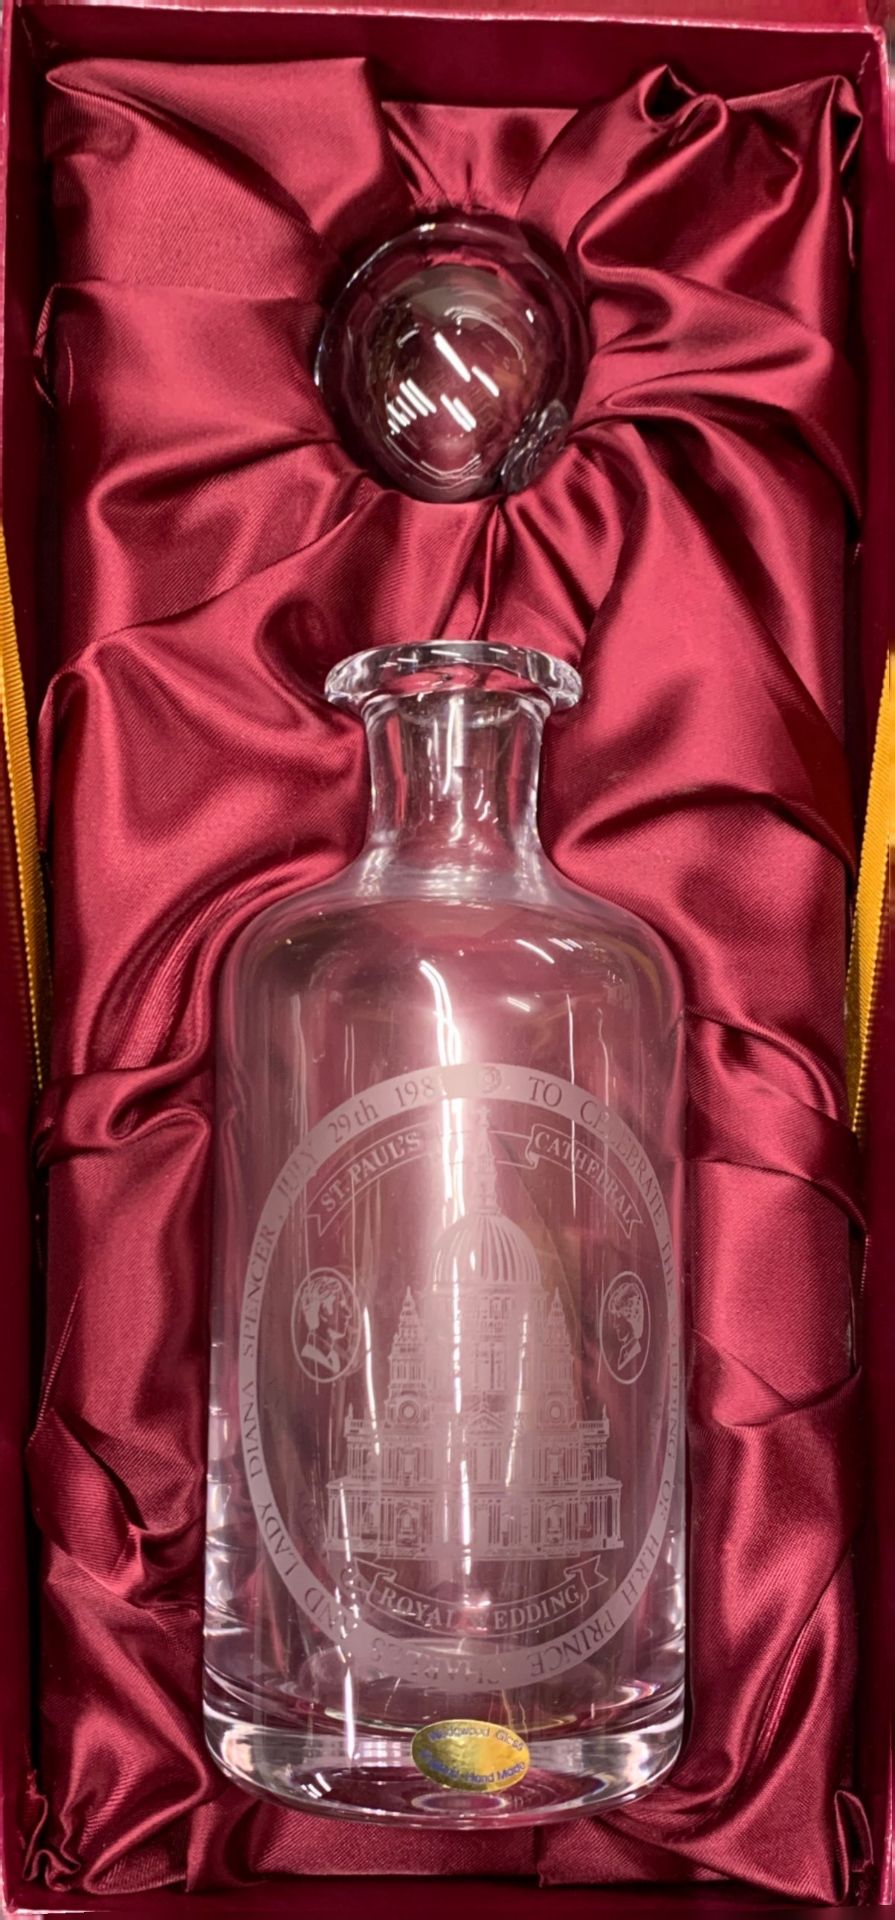 A boxed 1981 Wedgwood Royal wedding decanter.